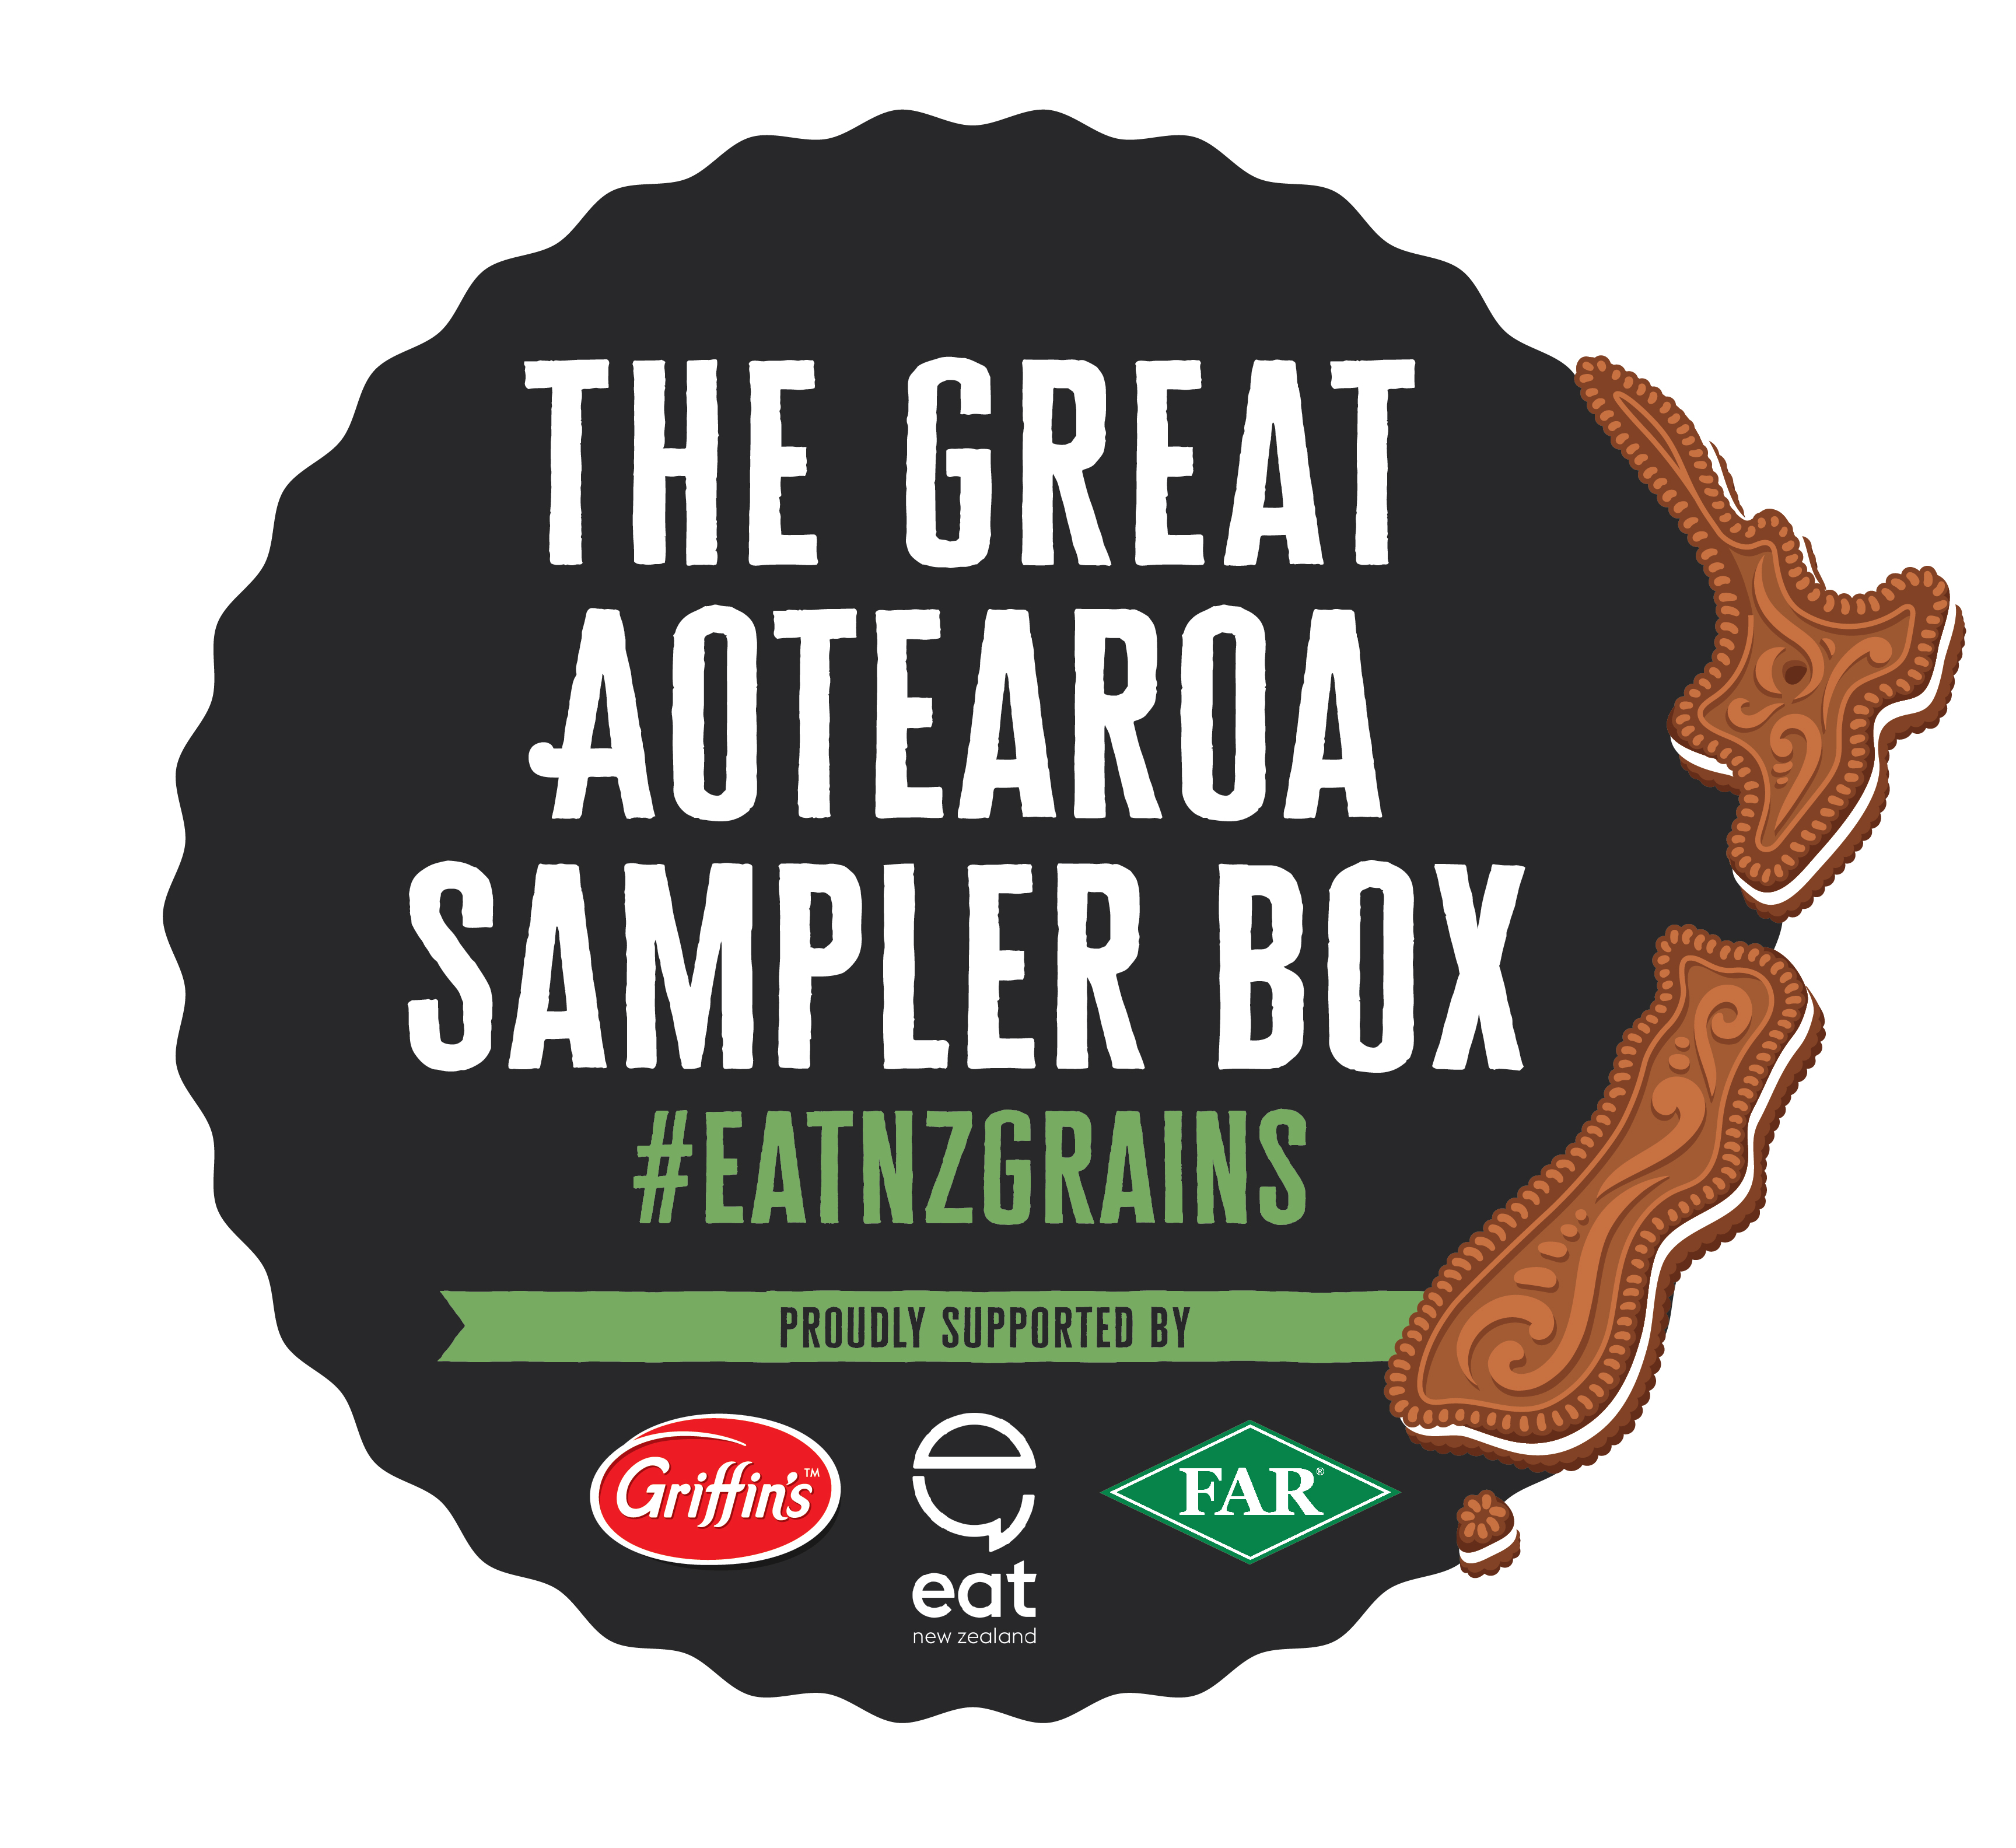 The Great Aotearoa Sampler Box